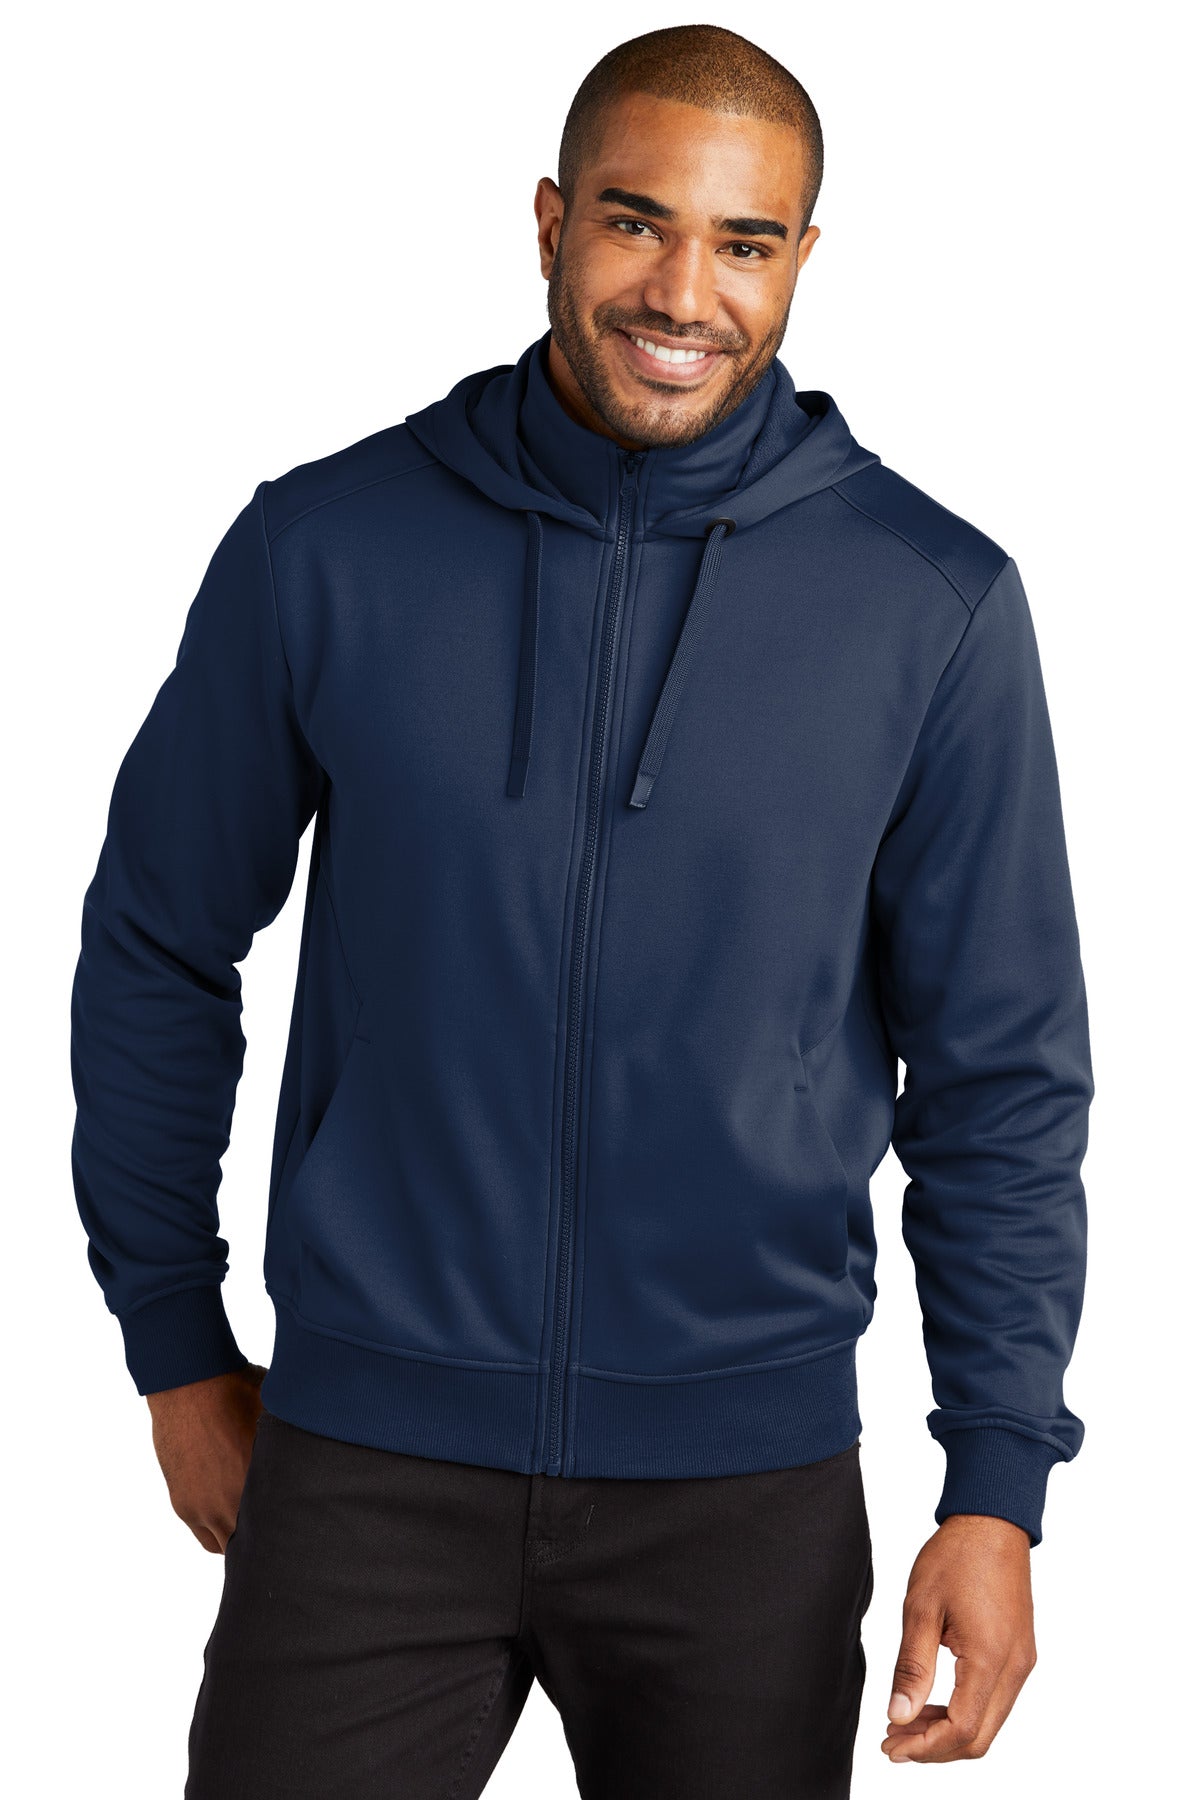 Port Authority® Smooth Fleece Hooded Jacket F814 - DFW Impression